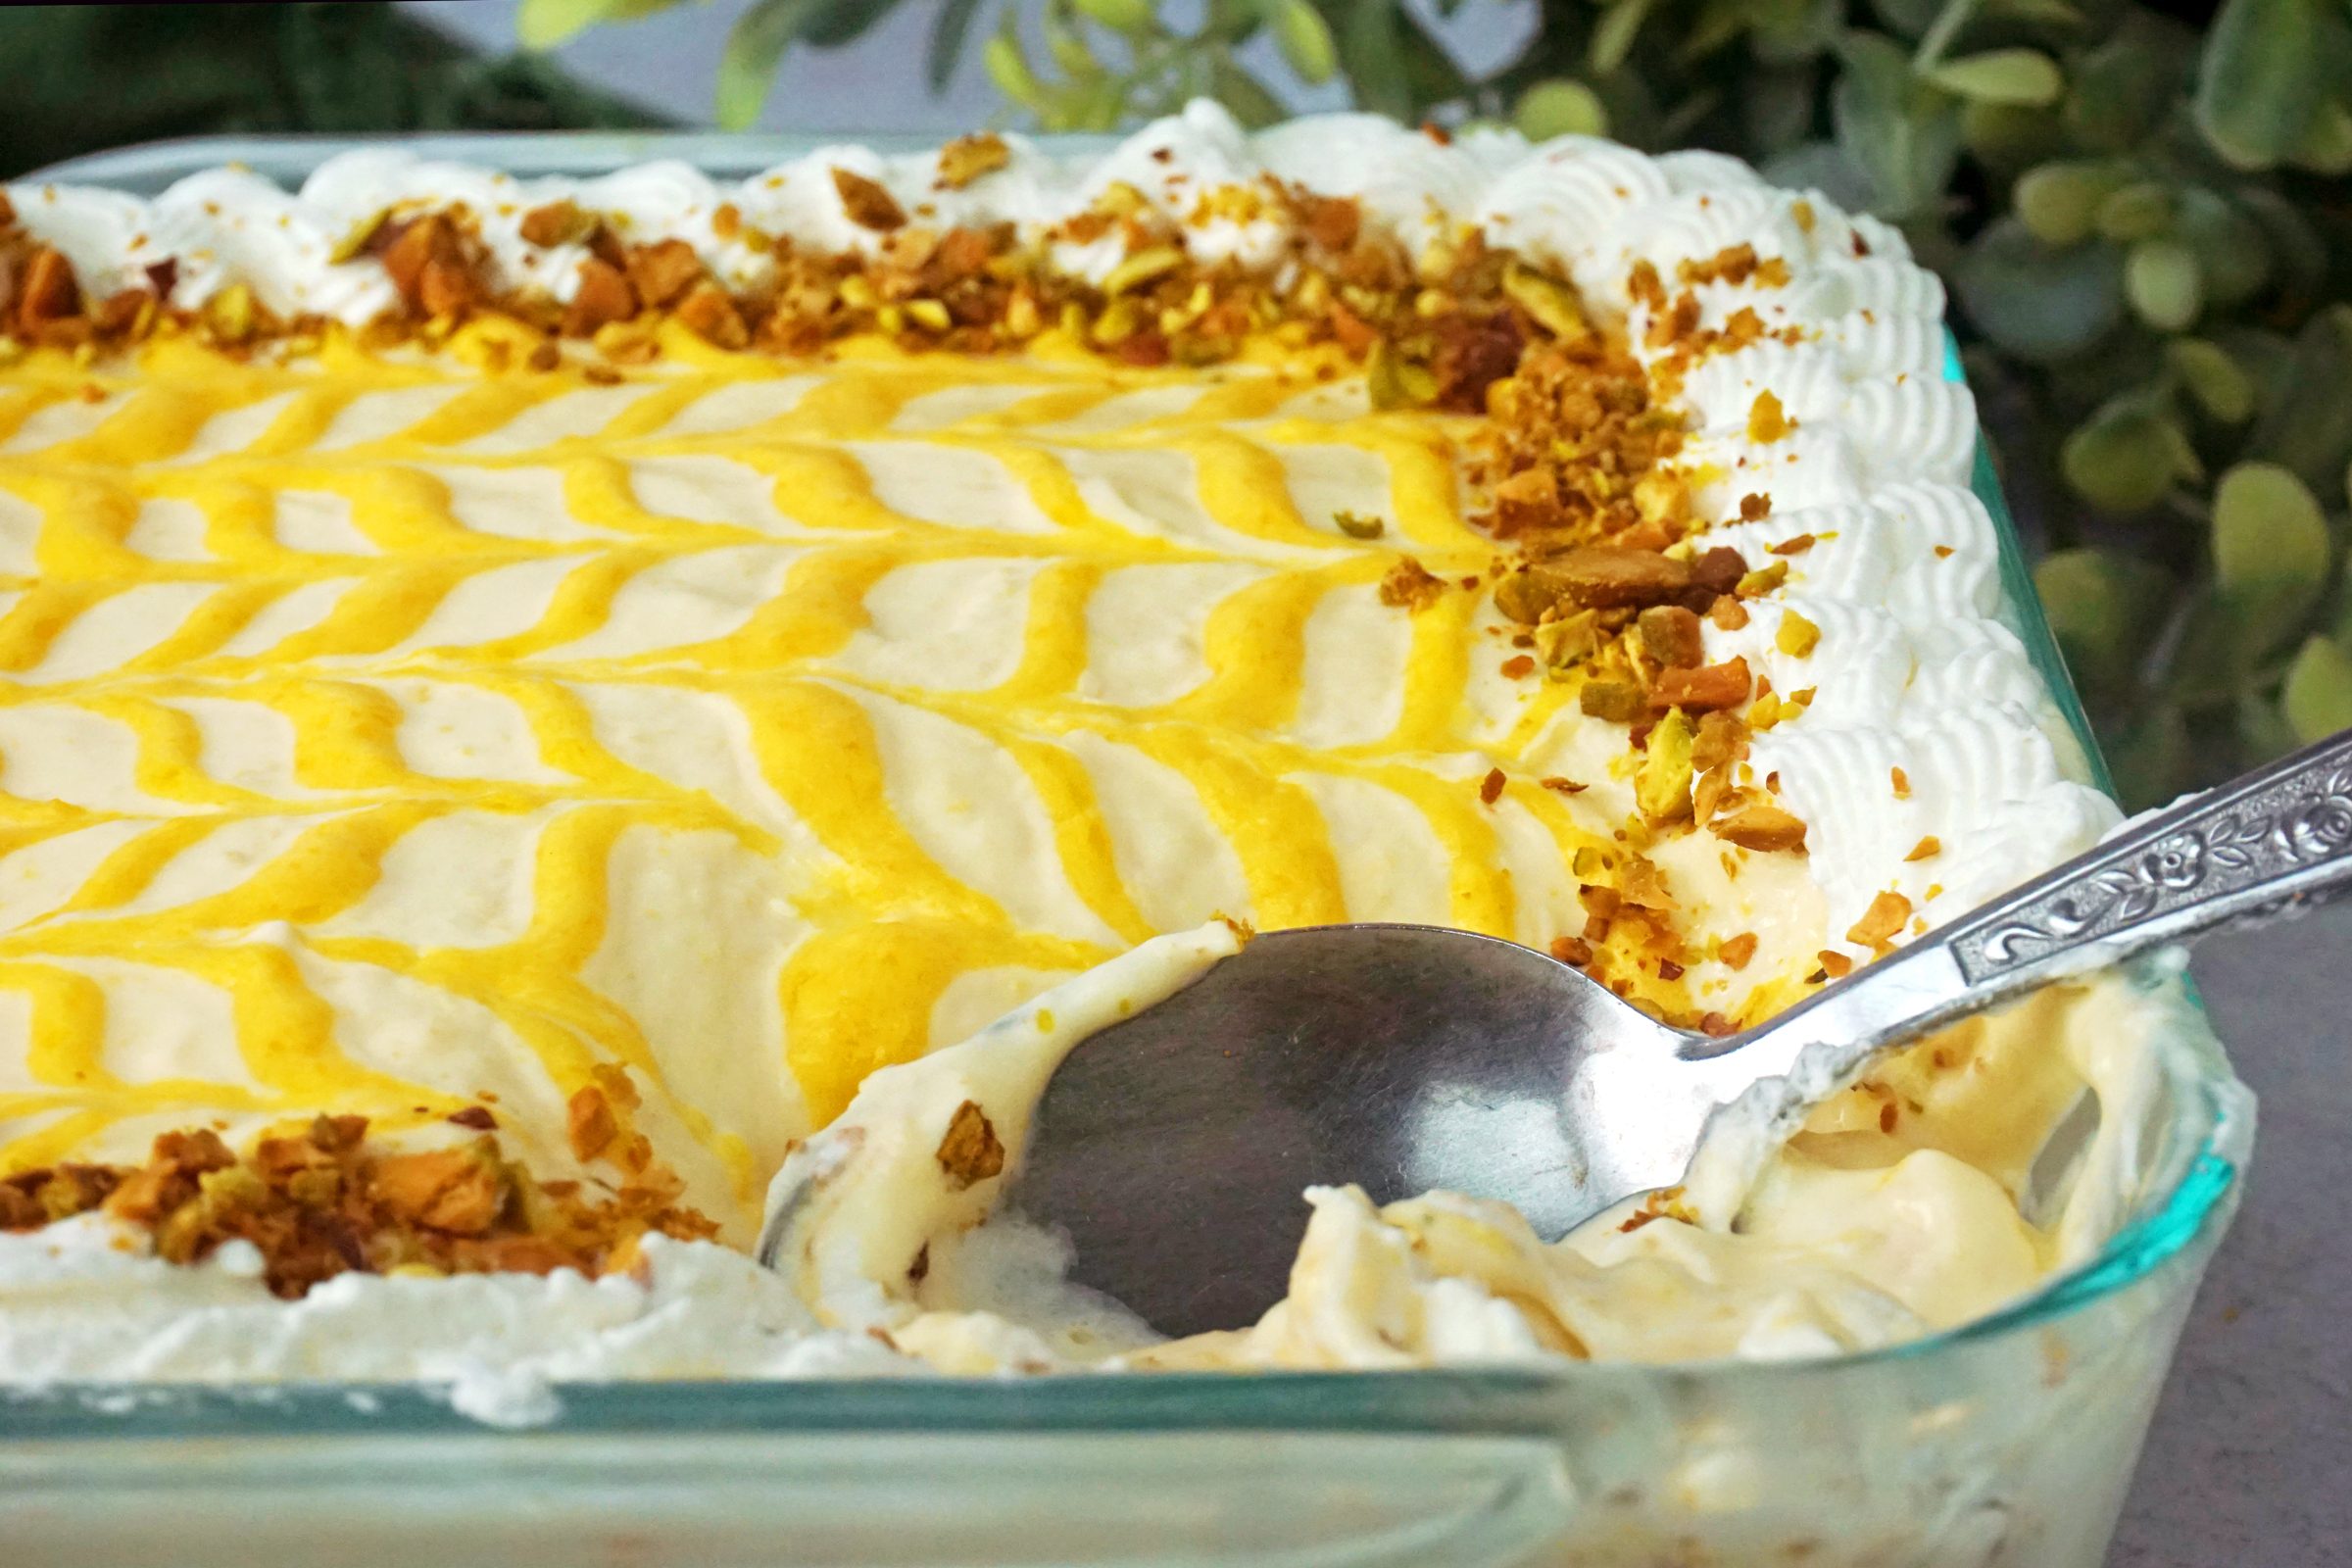 Mango delight cake for mango lover - Vrinda's Cake Studio | Facebook